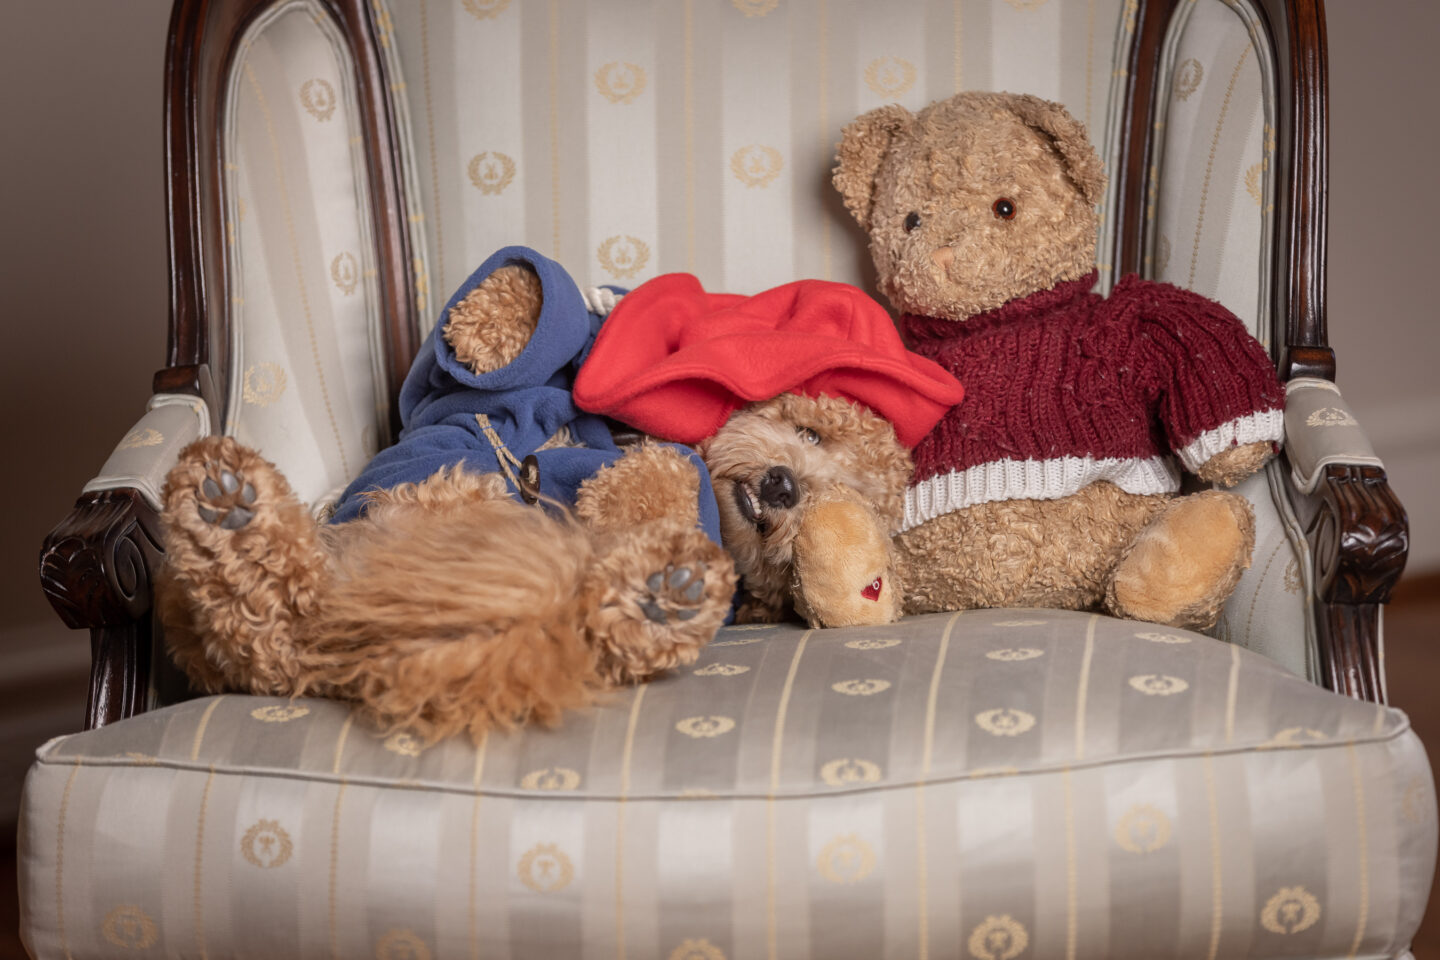 Tired Puppy dressed as Paddington Bear lies down next to Teddy Bear